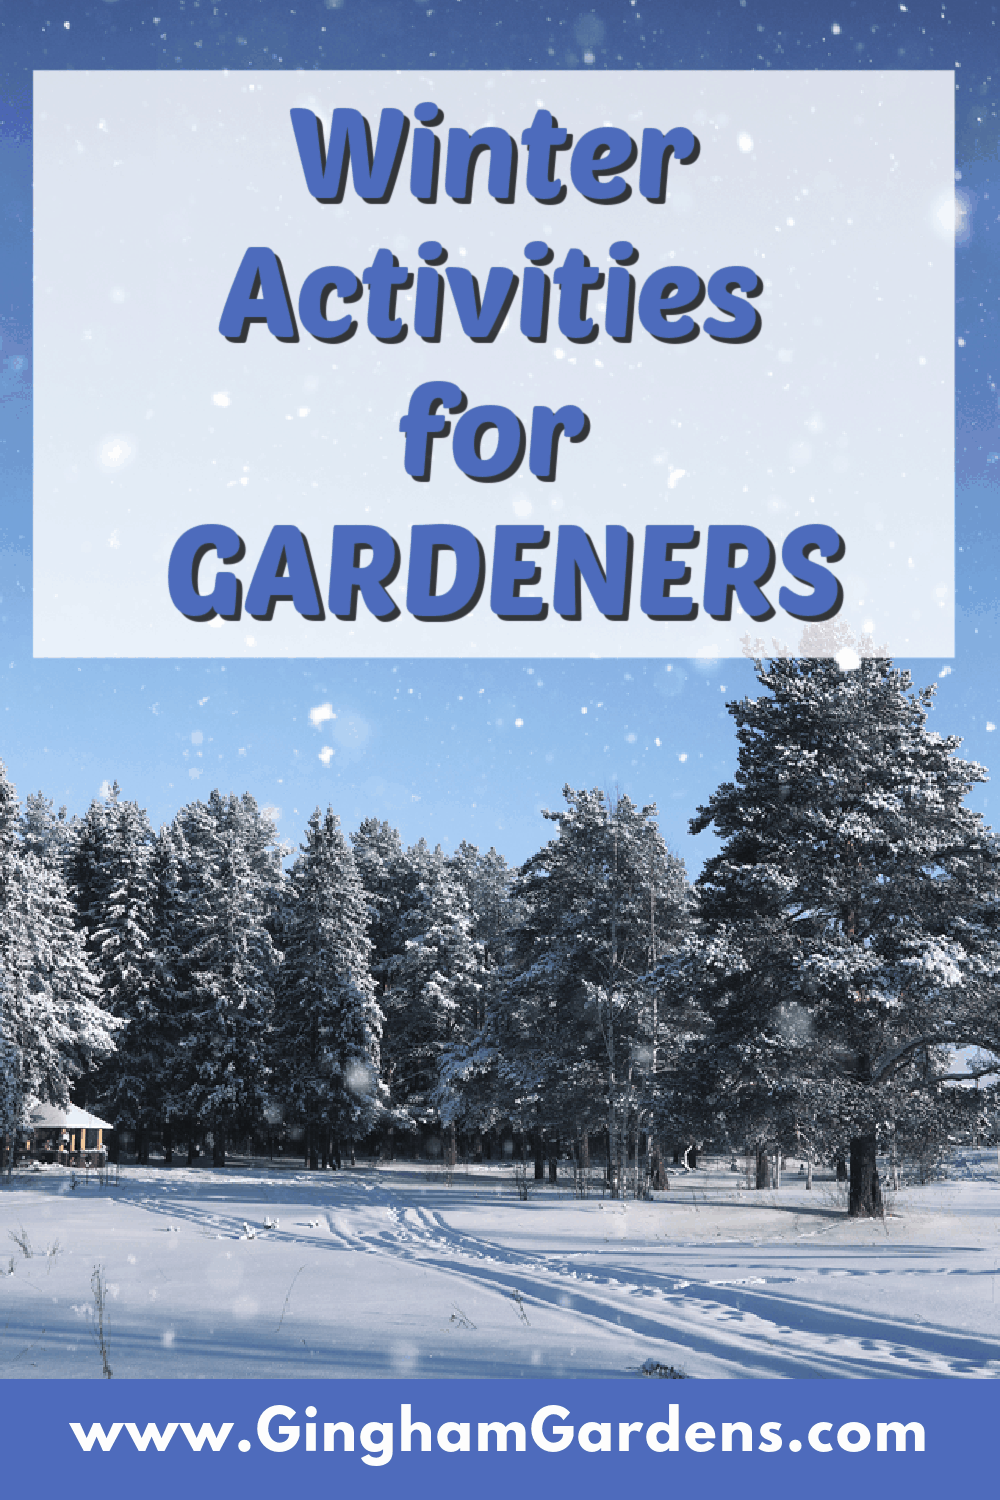 Image of an outdoor winter scene with text overlay - Winter Activities for Gardeners